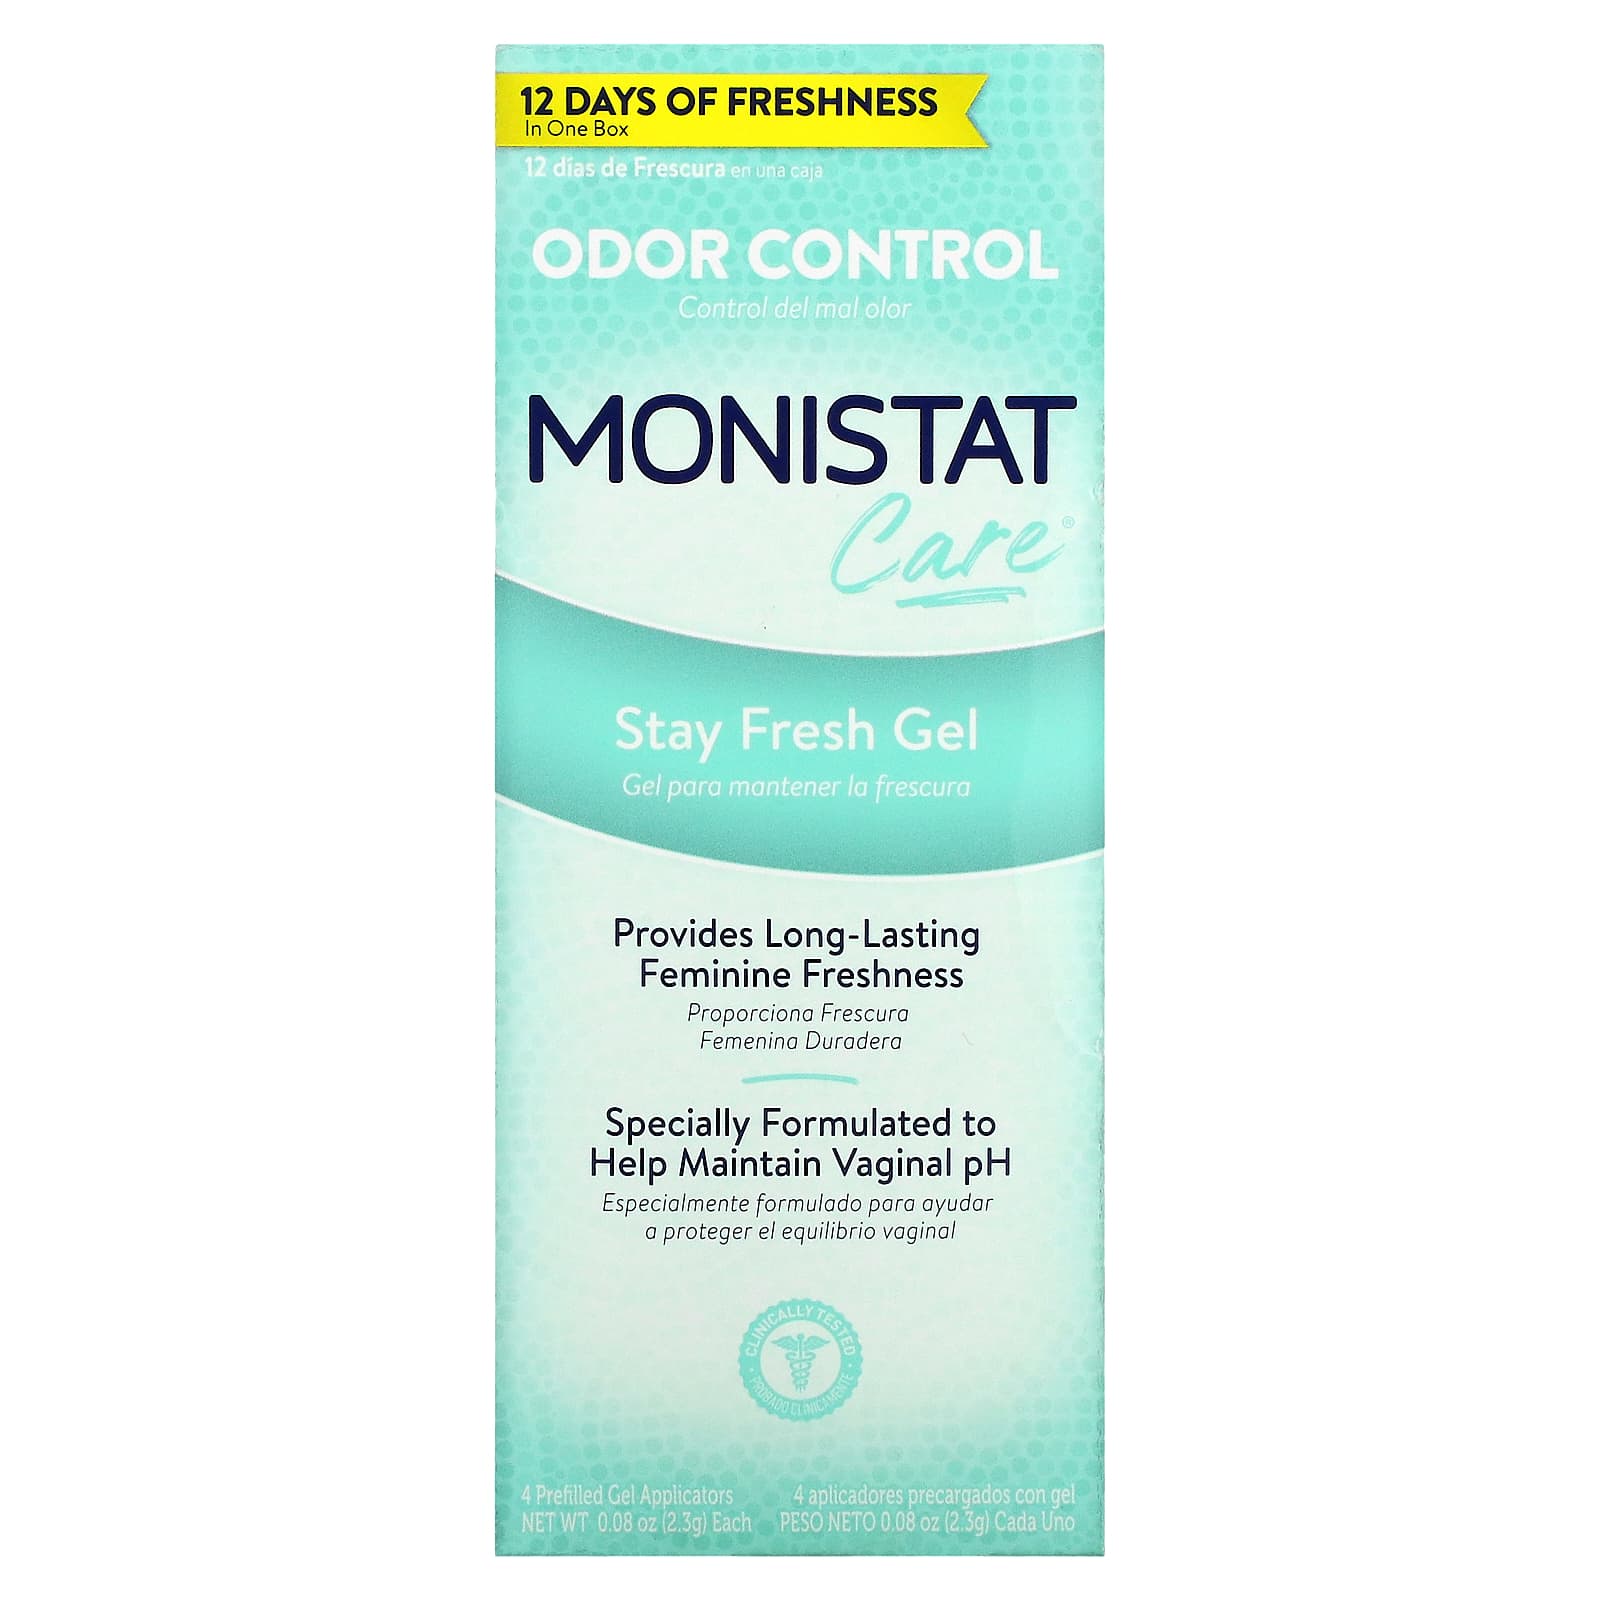 Гель Monistat Stay Fresh, 4 аппликатора по 2,3 г цена и фото